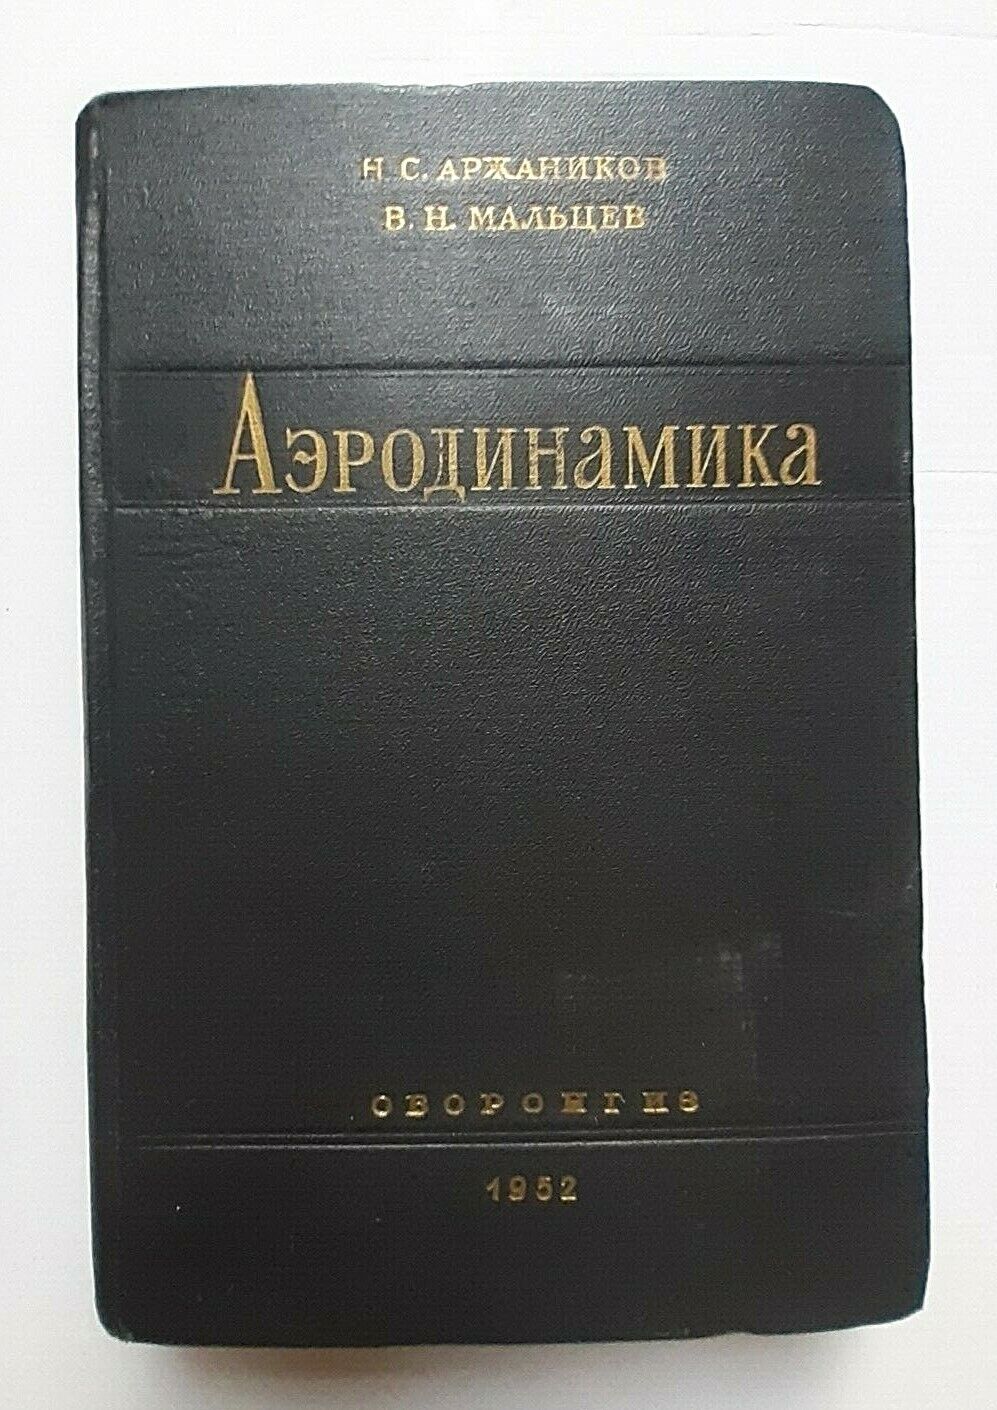 1952 Аэродинамика Aerodynamics Aircraft Aviation Manual Oborongiz Russian book 